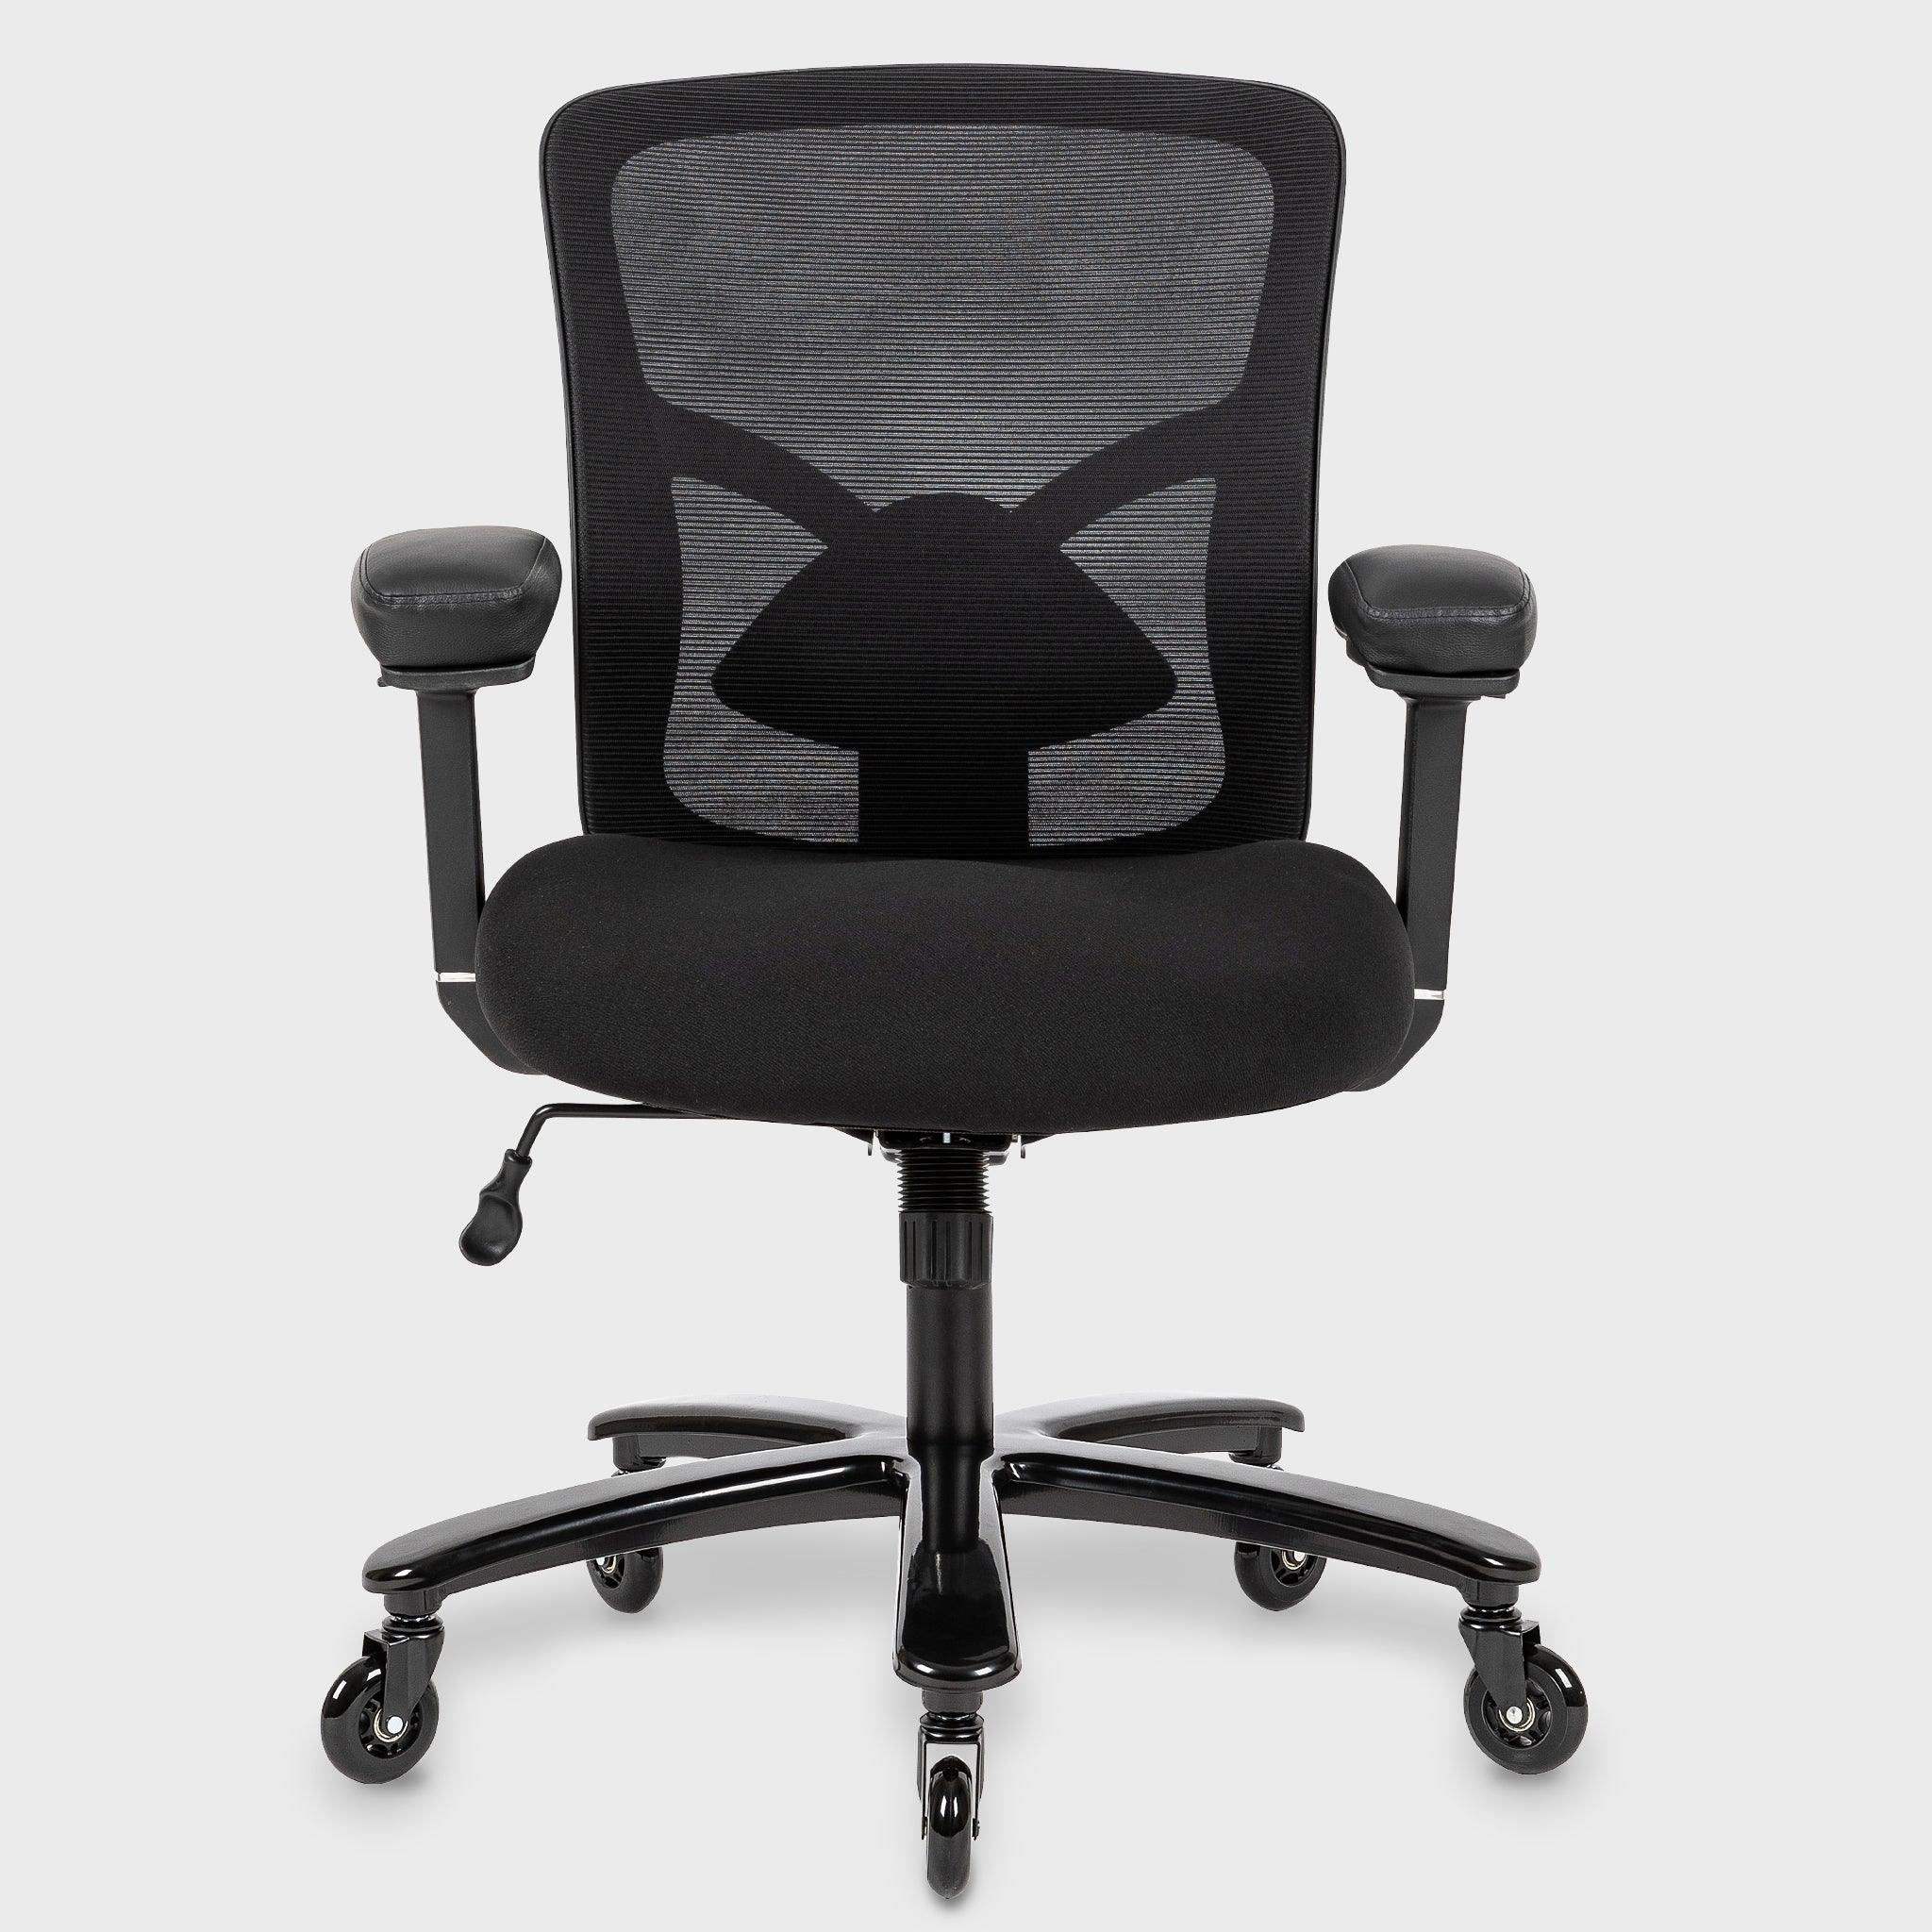 Ergonomic Office Chair Pro 5127 - Honsit Chair